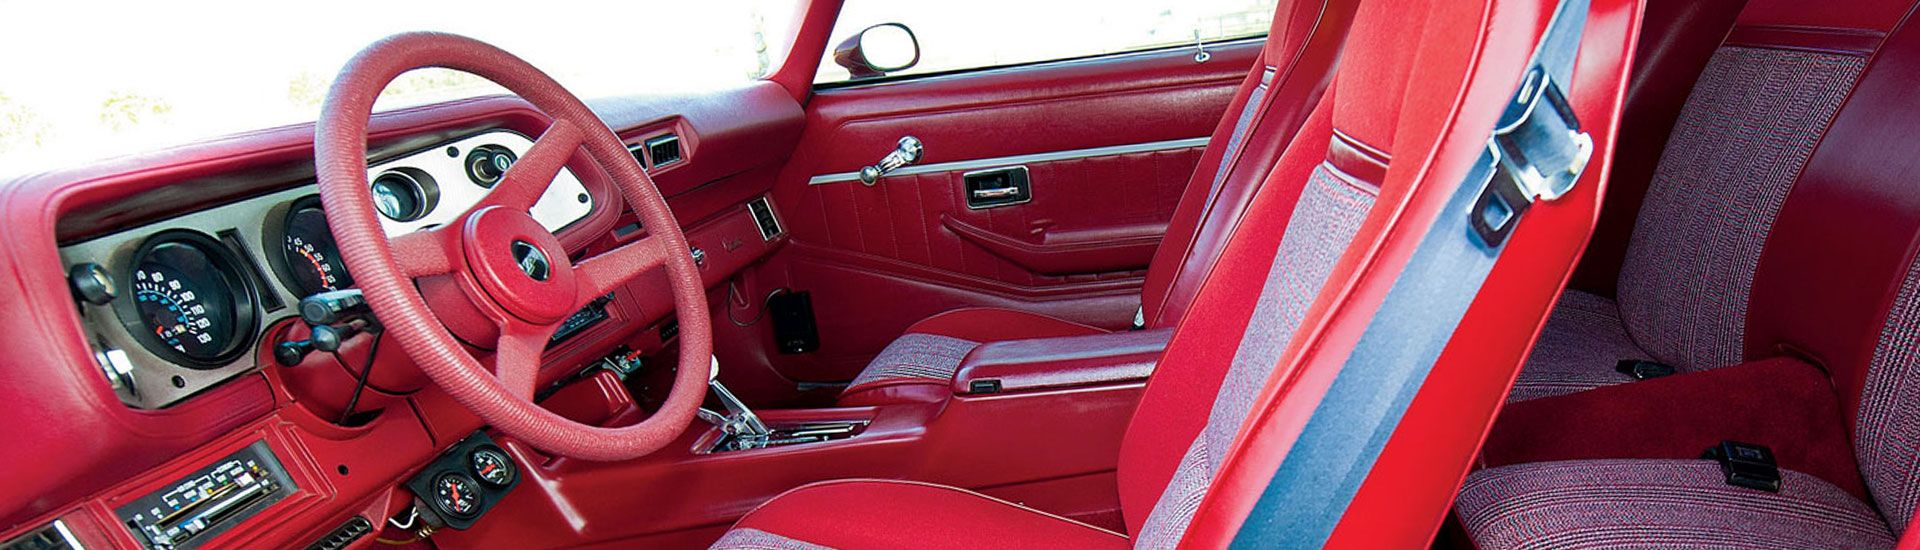 1978 Chevrolet Camaro Dash Kits